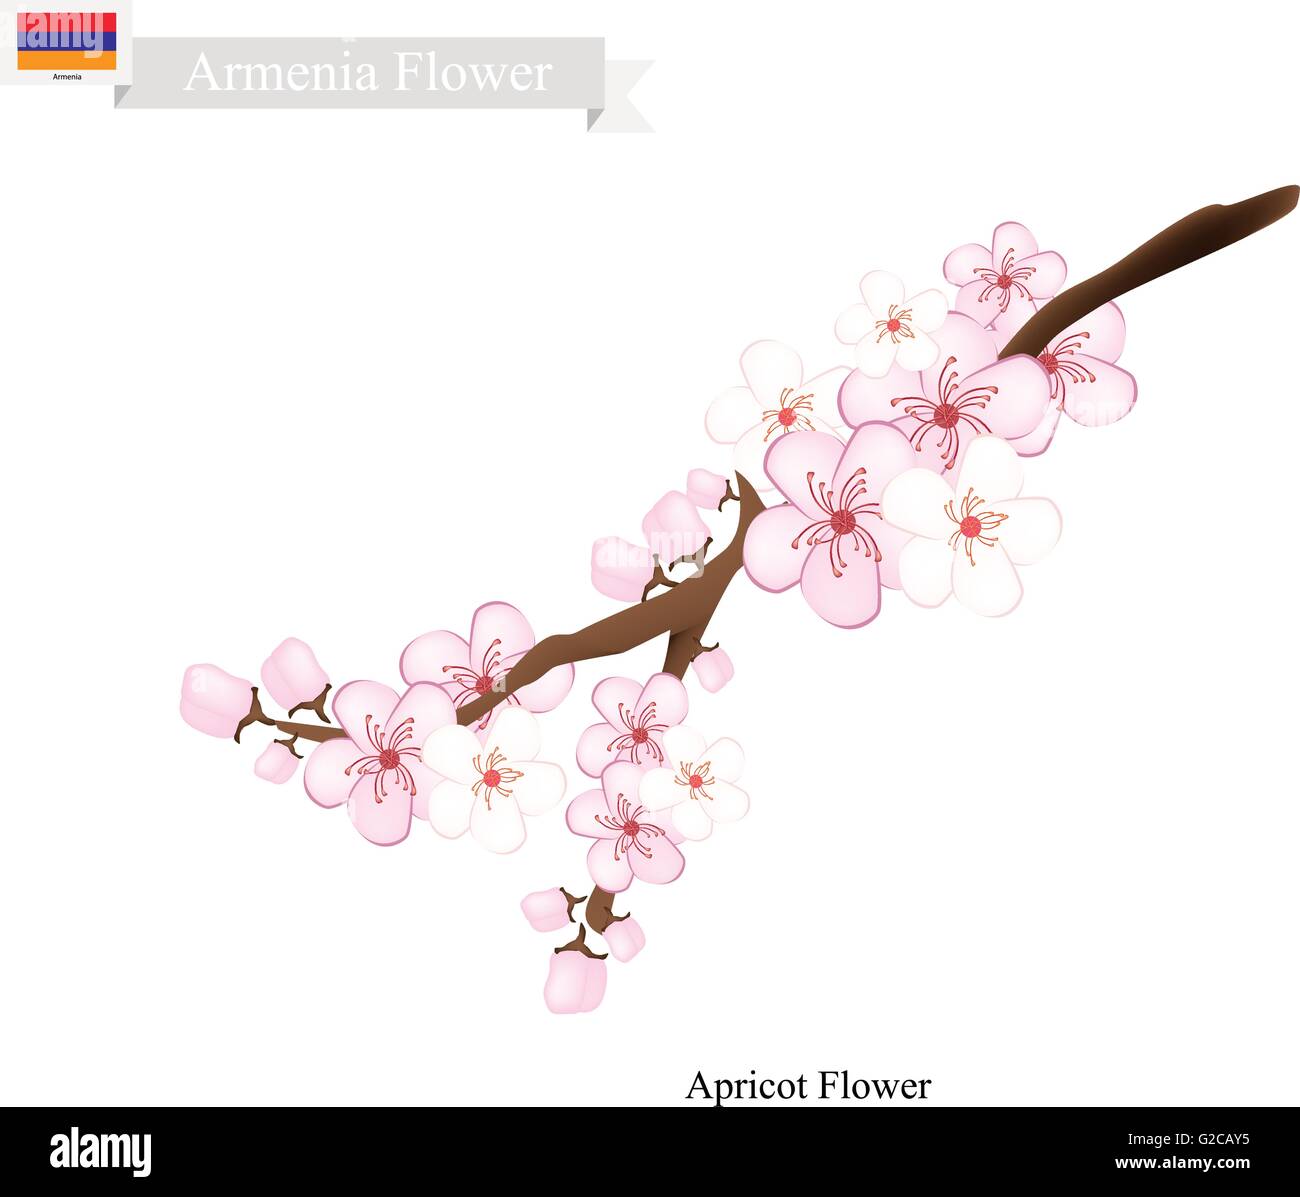 Armenia Flower, Illustration of Apricot Flower. One of Most Popular Flower in Armenia. Stock Vector